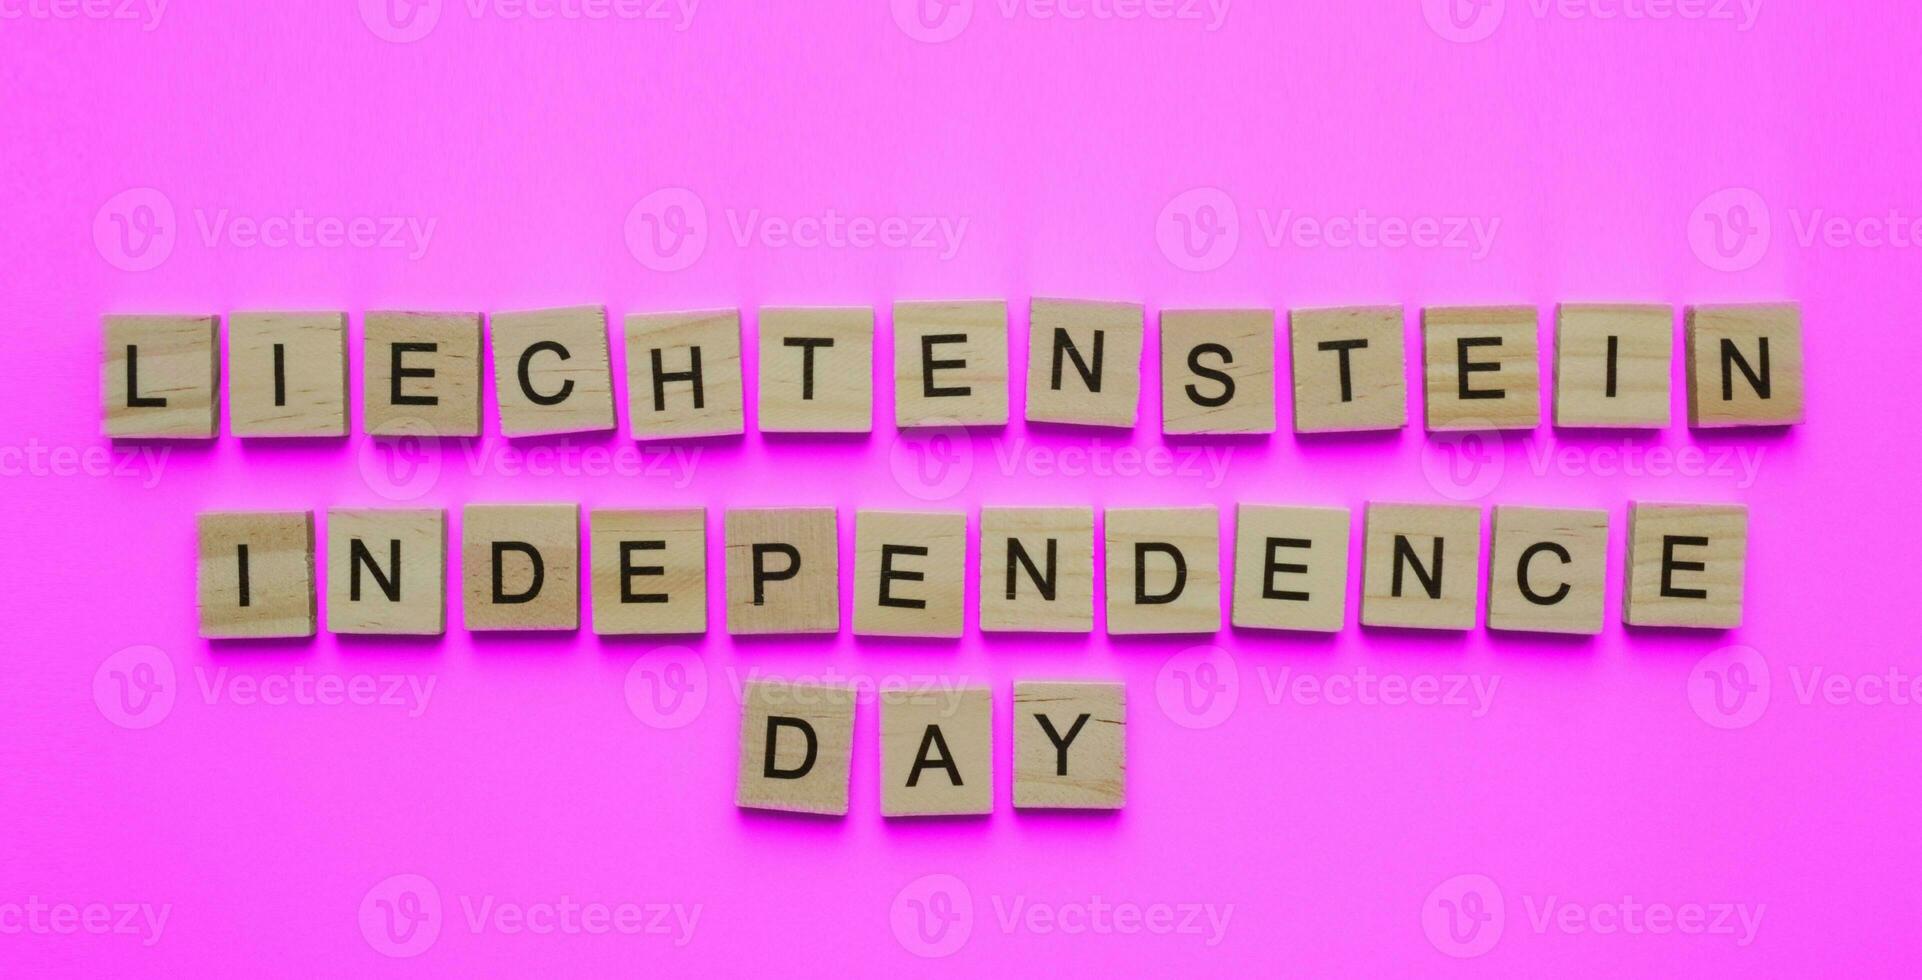 agosto 15, Liechtenstein independencia día, Liechtenstein nacional día, minimalista bandera con de madera letras foto